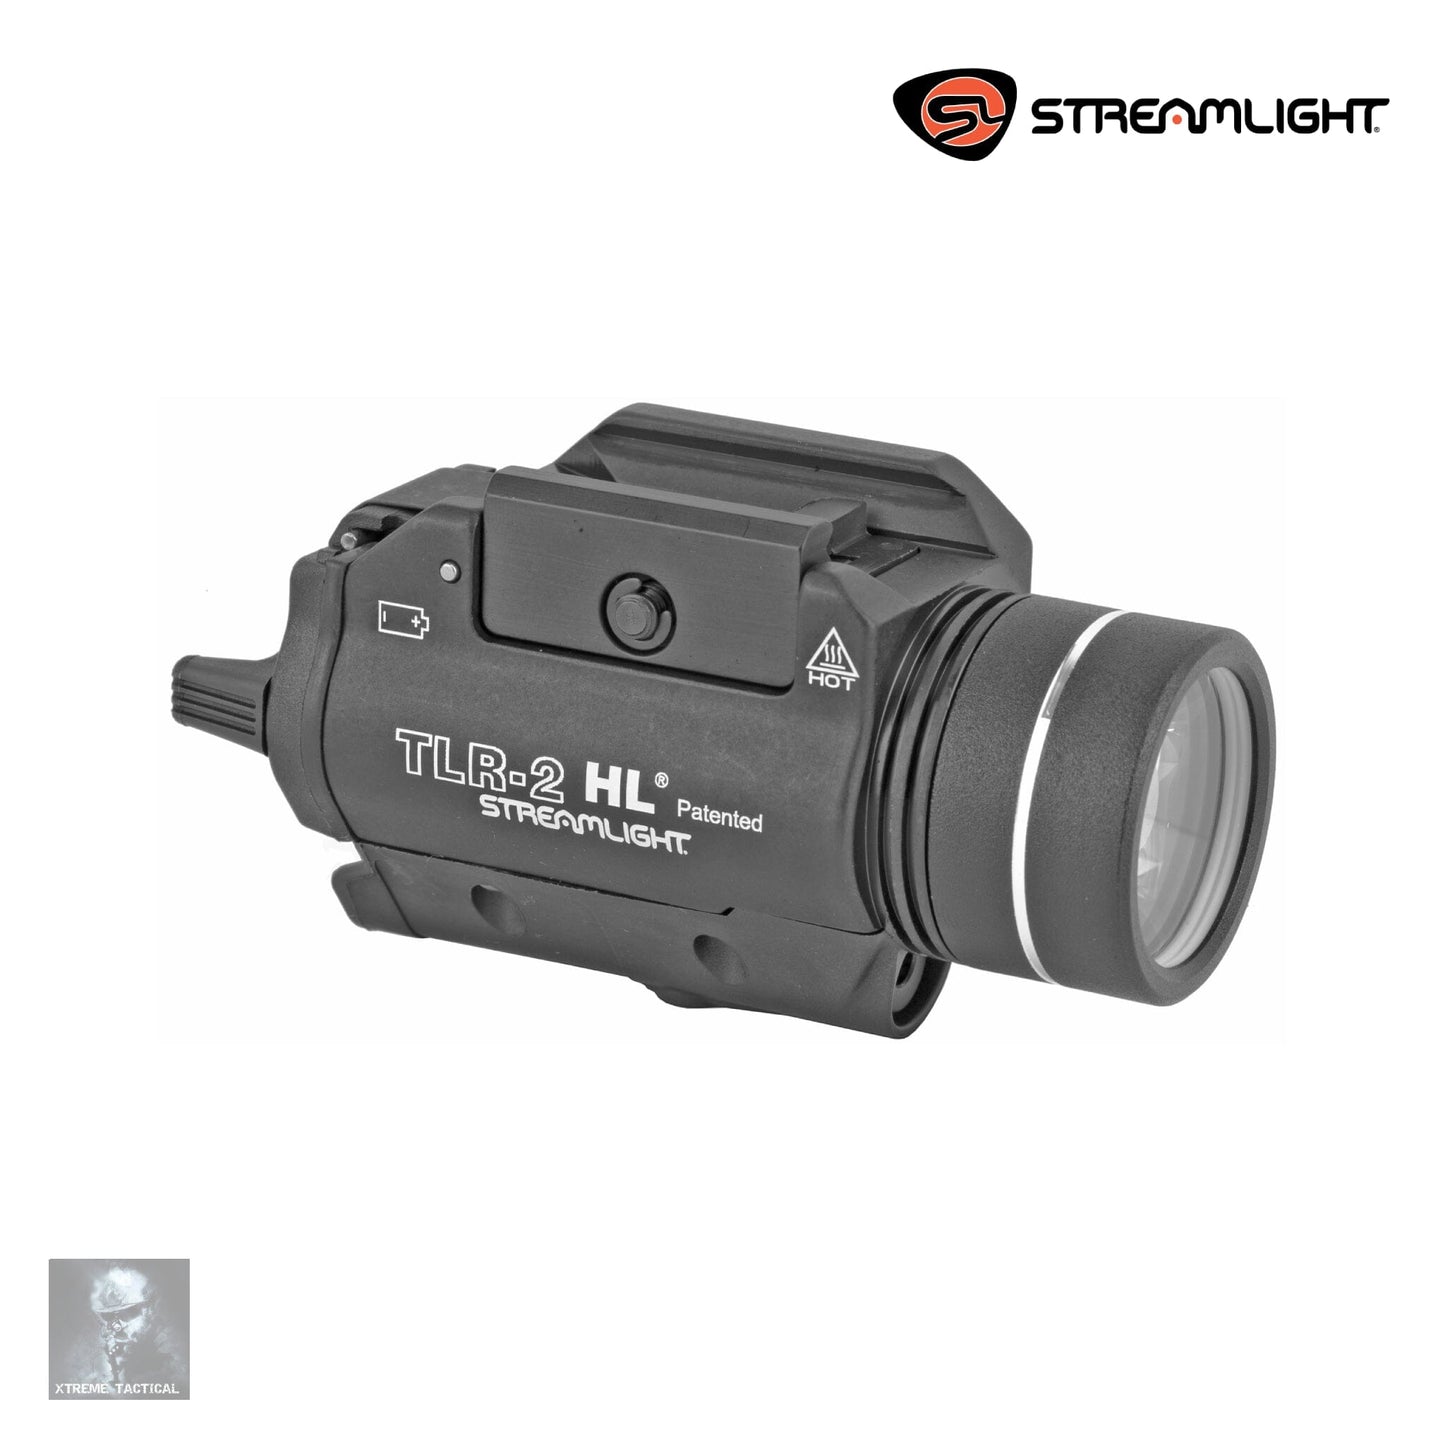 Streamlight TLR-2 HL Weapon Light with Laser Weapon Light Streamlight 